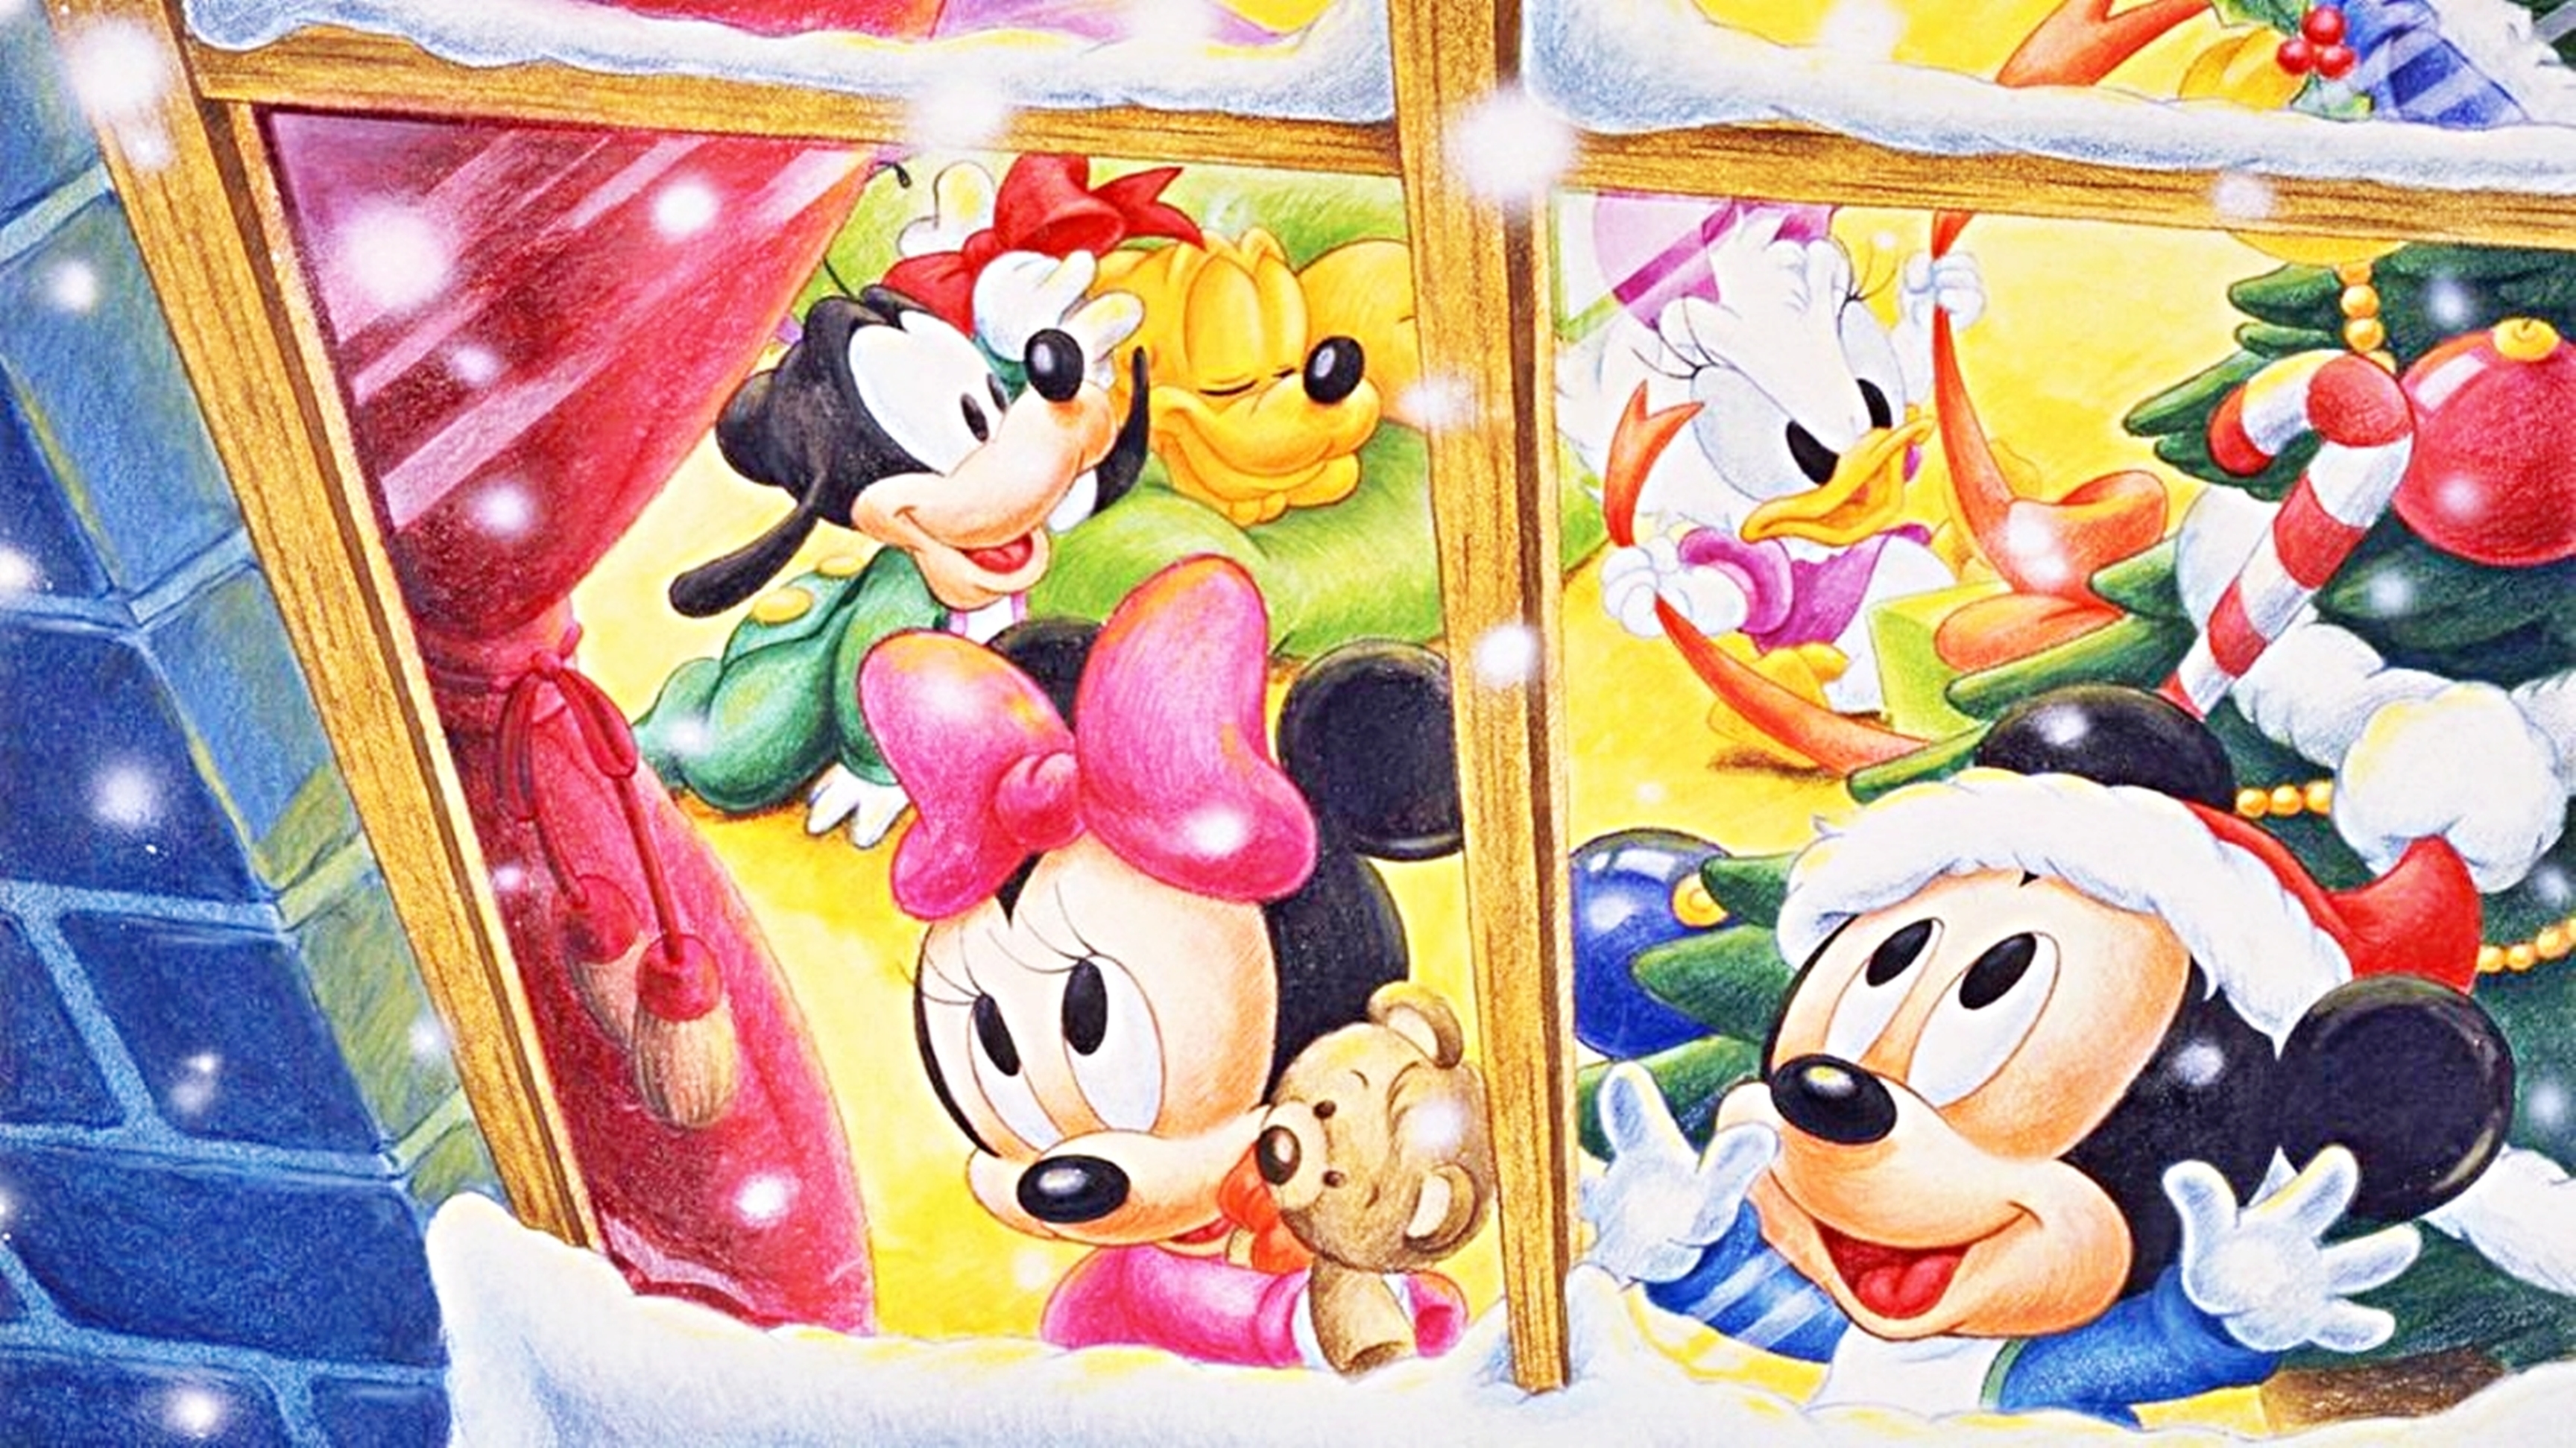 Cute Disney Characters Desktop Wallpapers